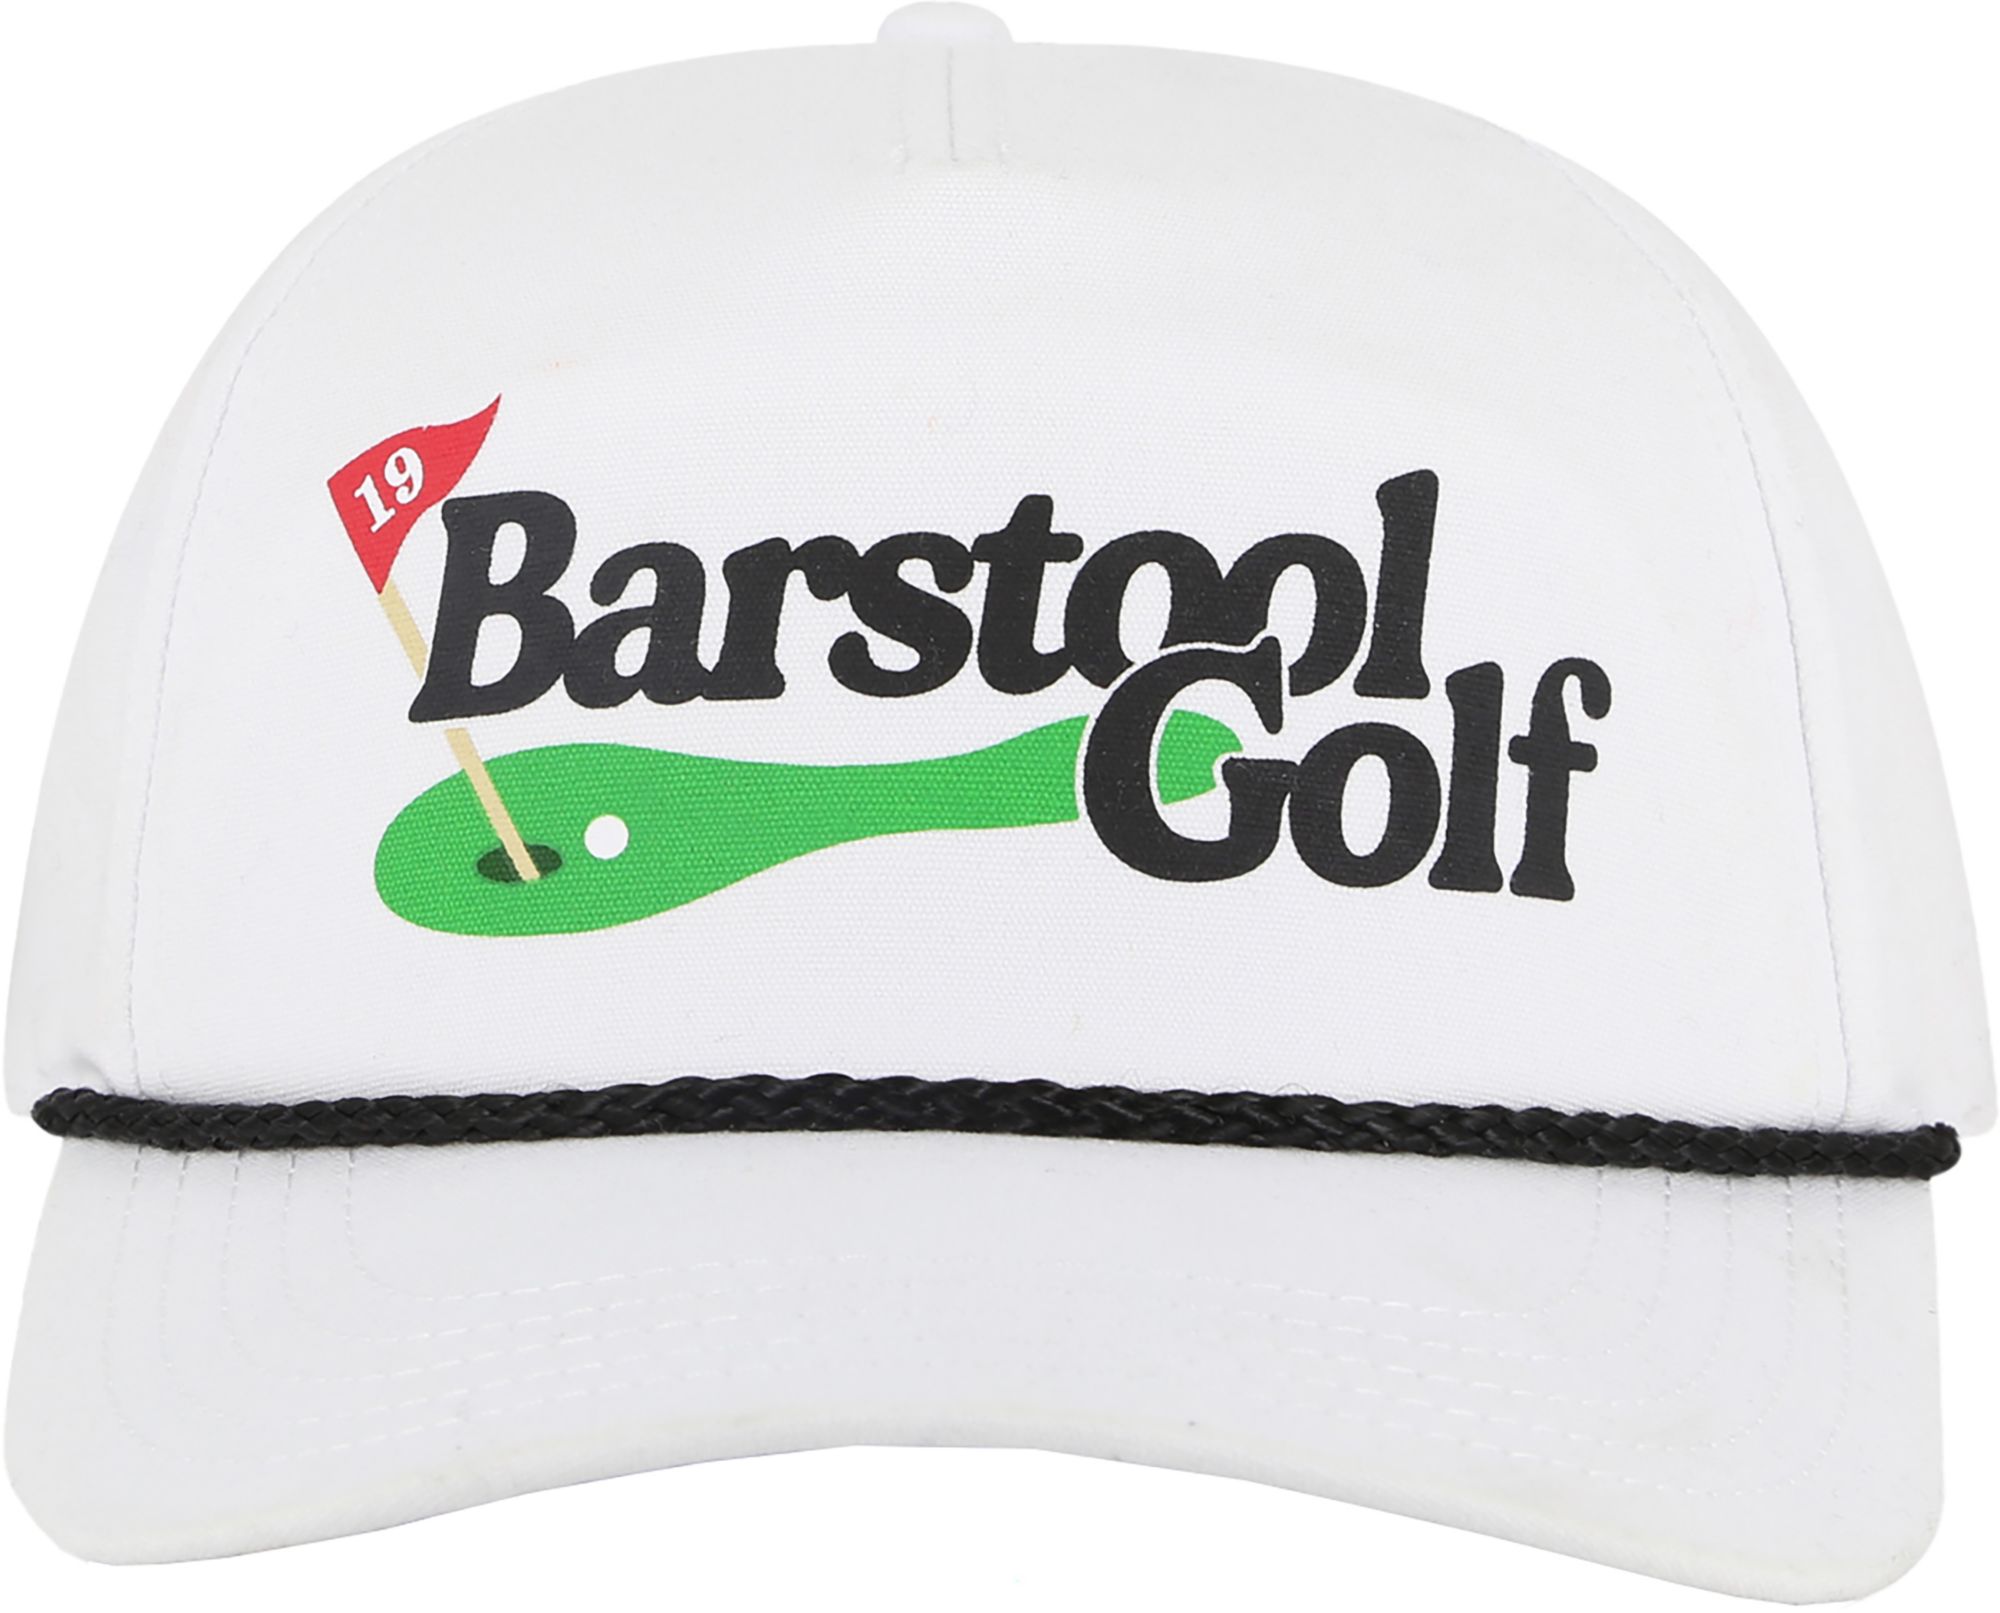 Barstool Sports Men's Canvas Rope Golf Hat